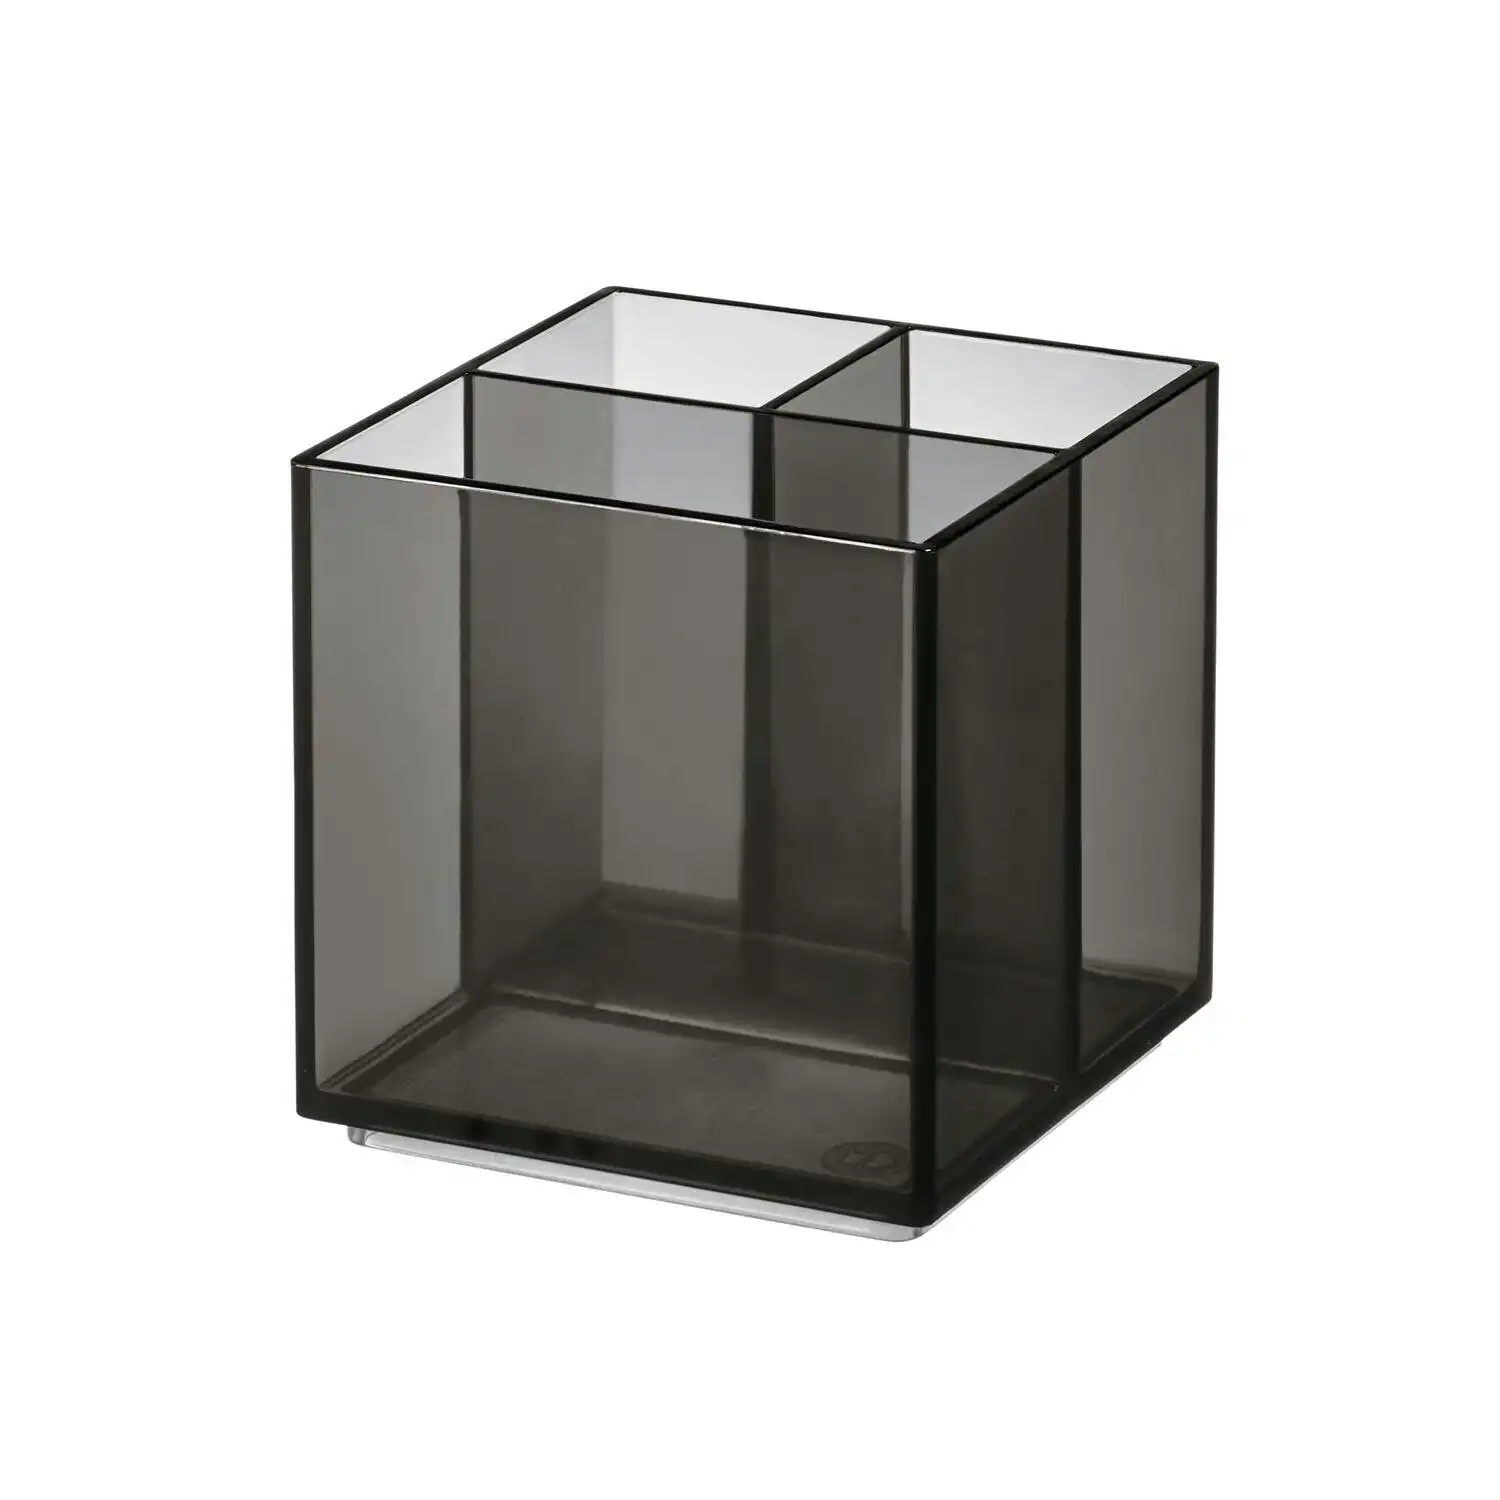 Idesign 10.79cm Cosmetic Cube Makeup Storage Holder Organiser Smoke/Matte Black